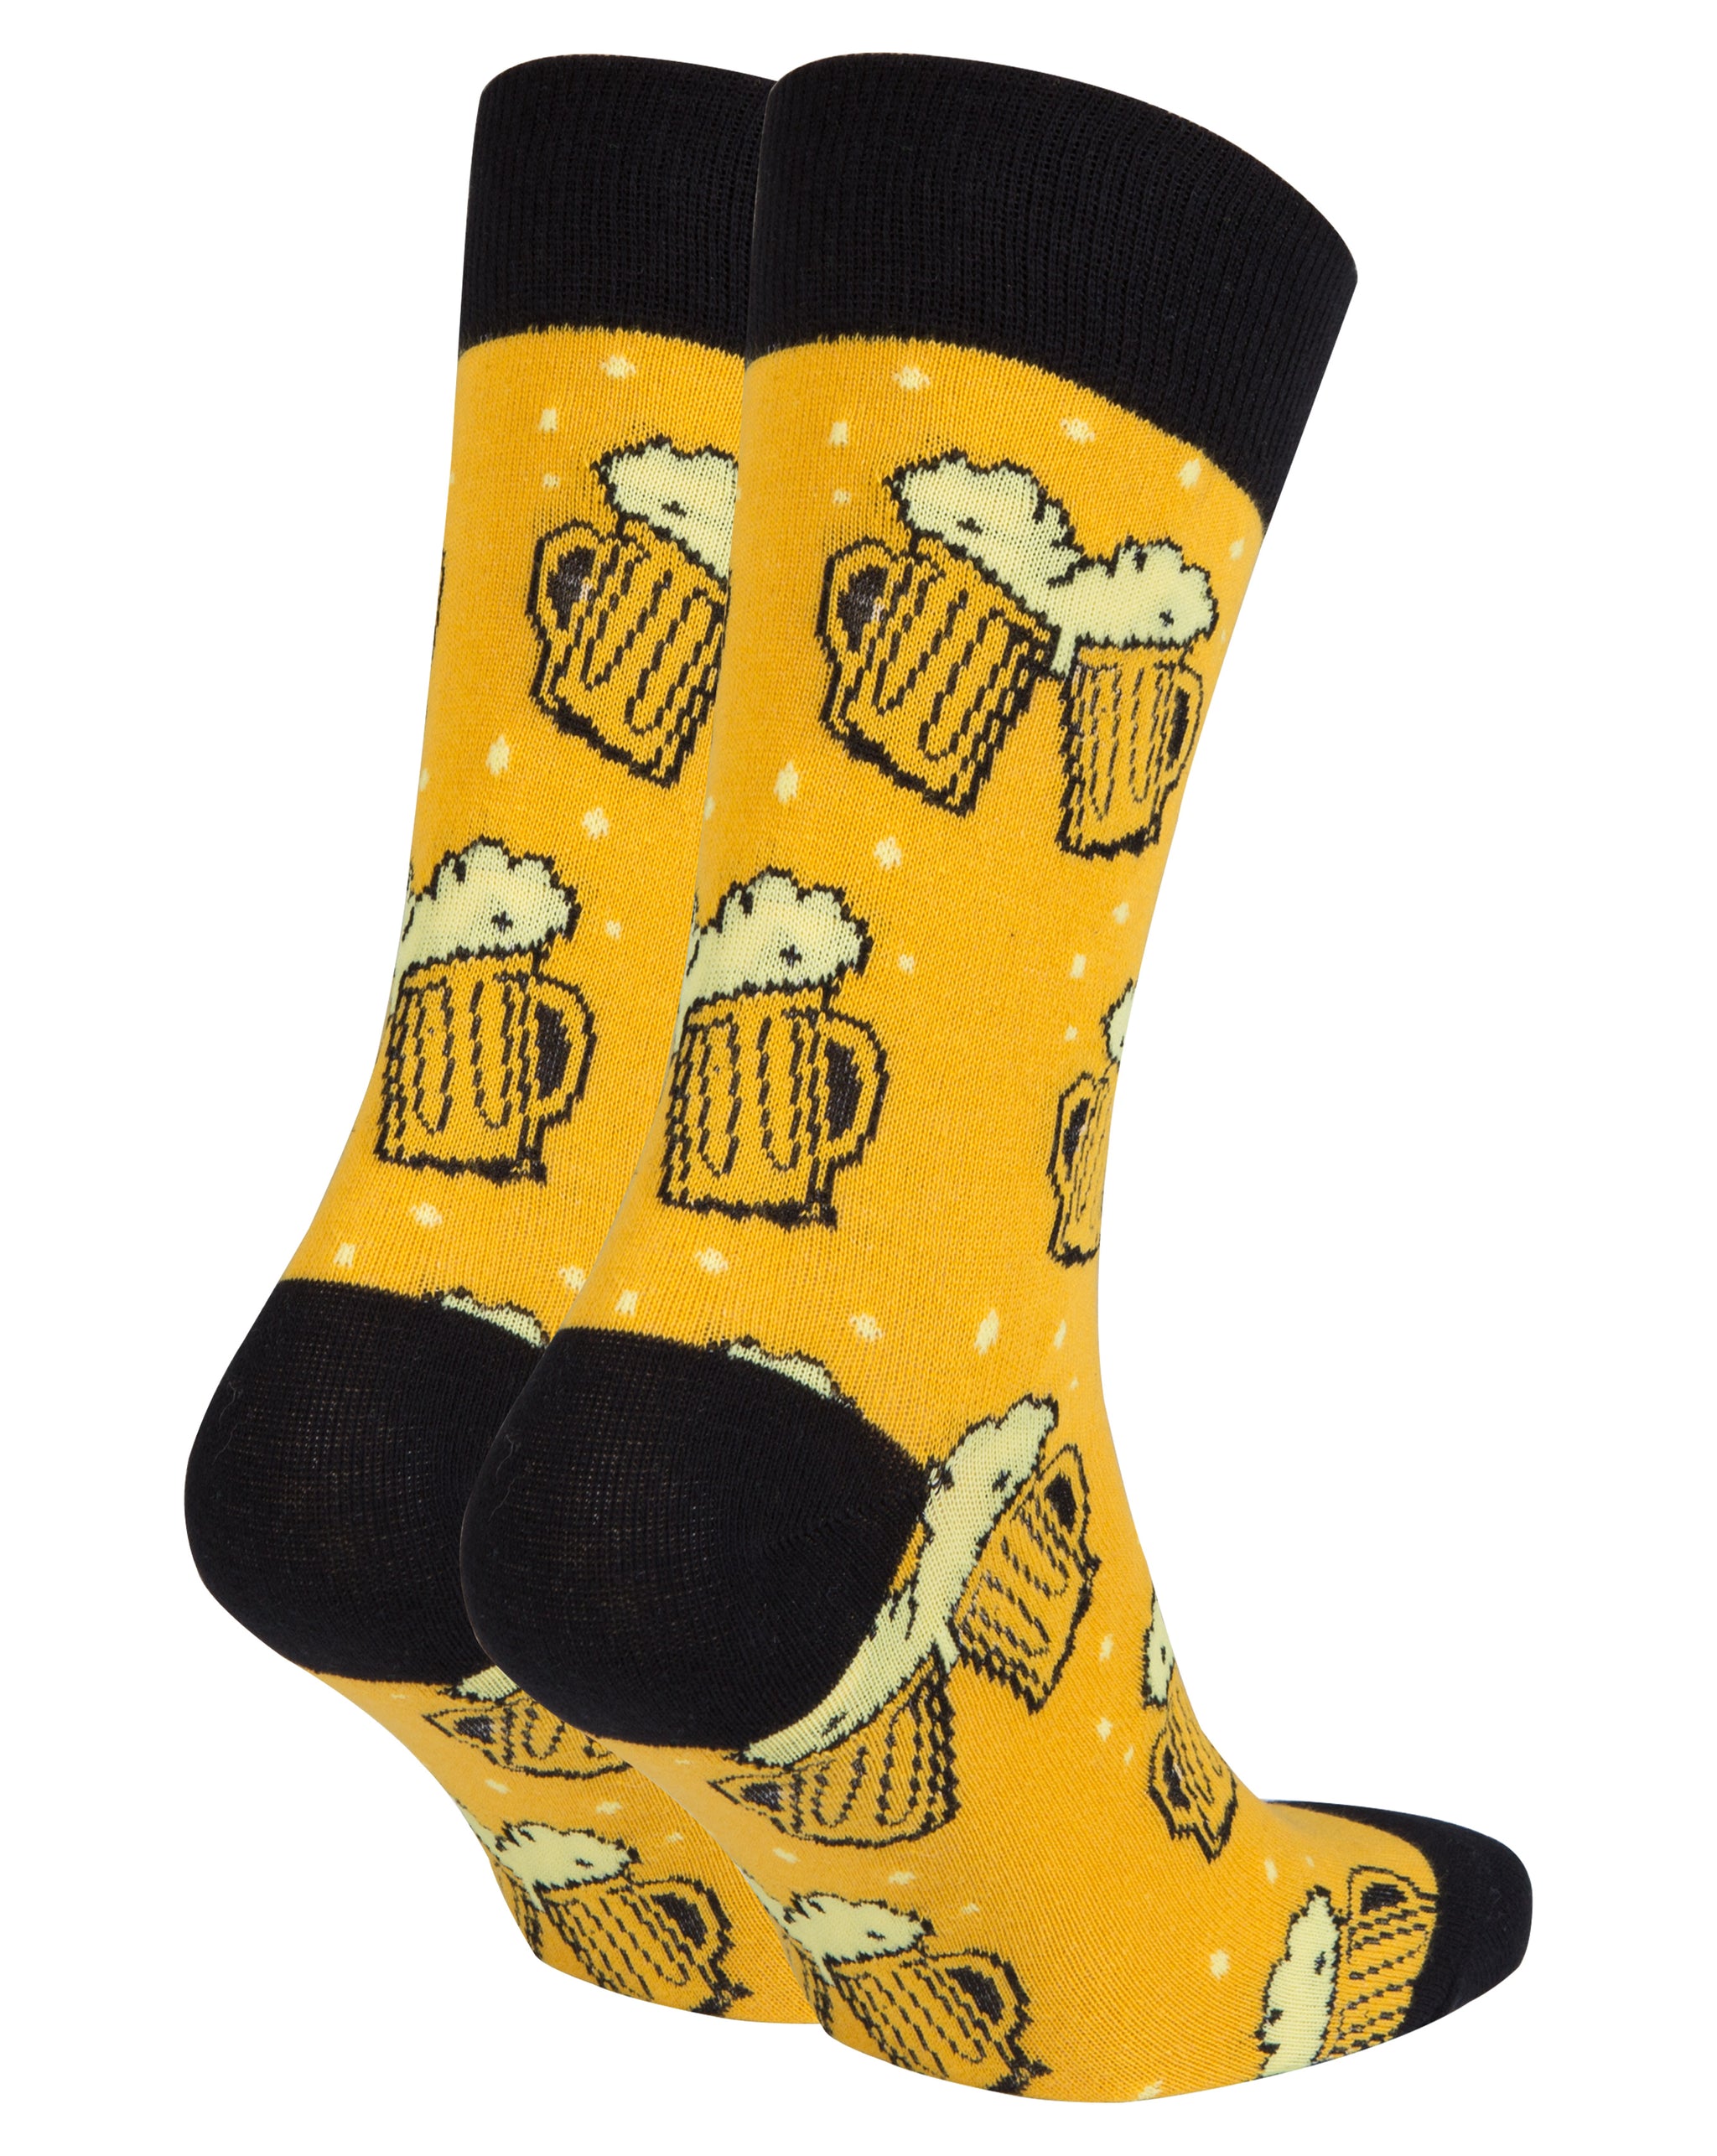 Men's Beer Socks - Socks n Socks